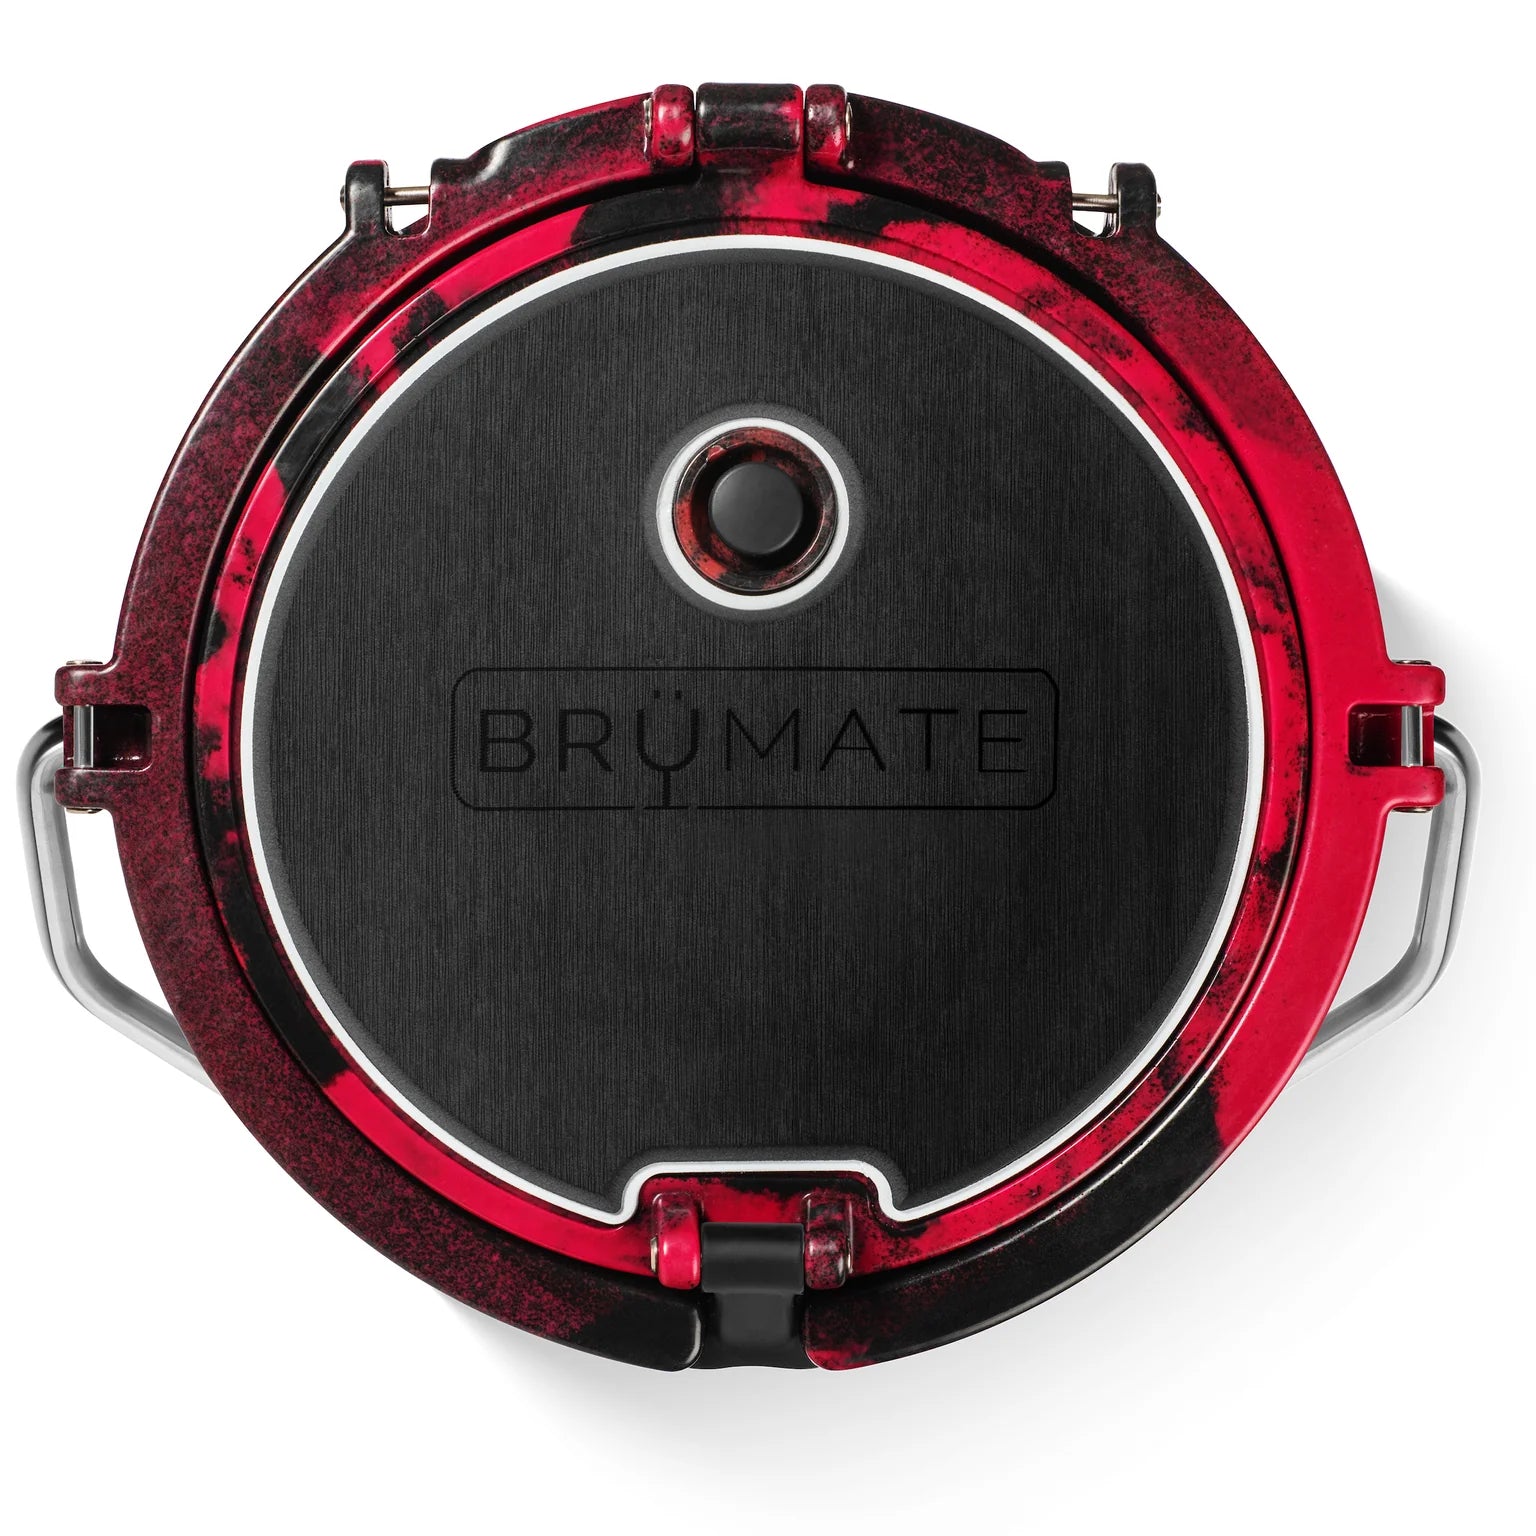 Brumate BackTap - Red and Black Swirl – Beavtown T's